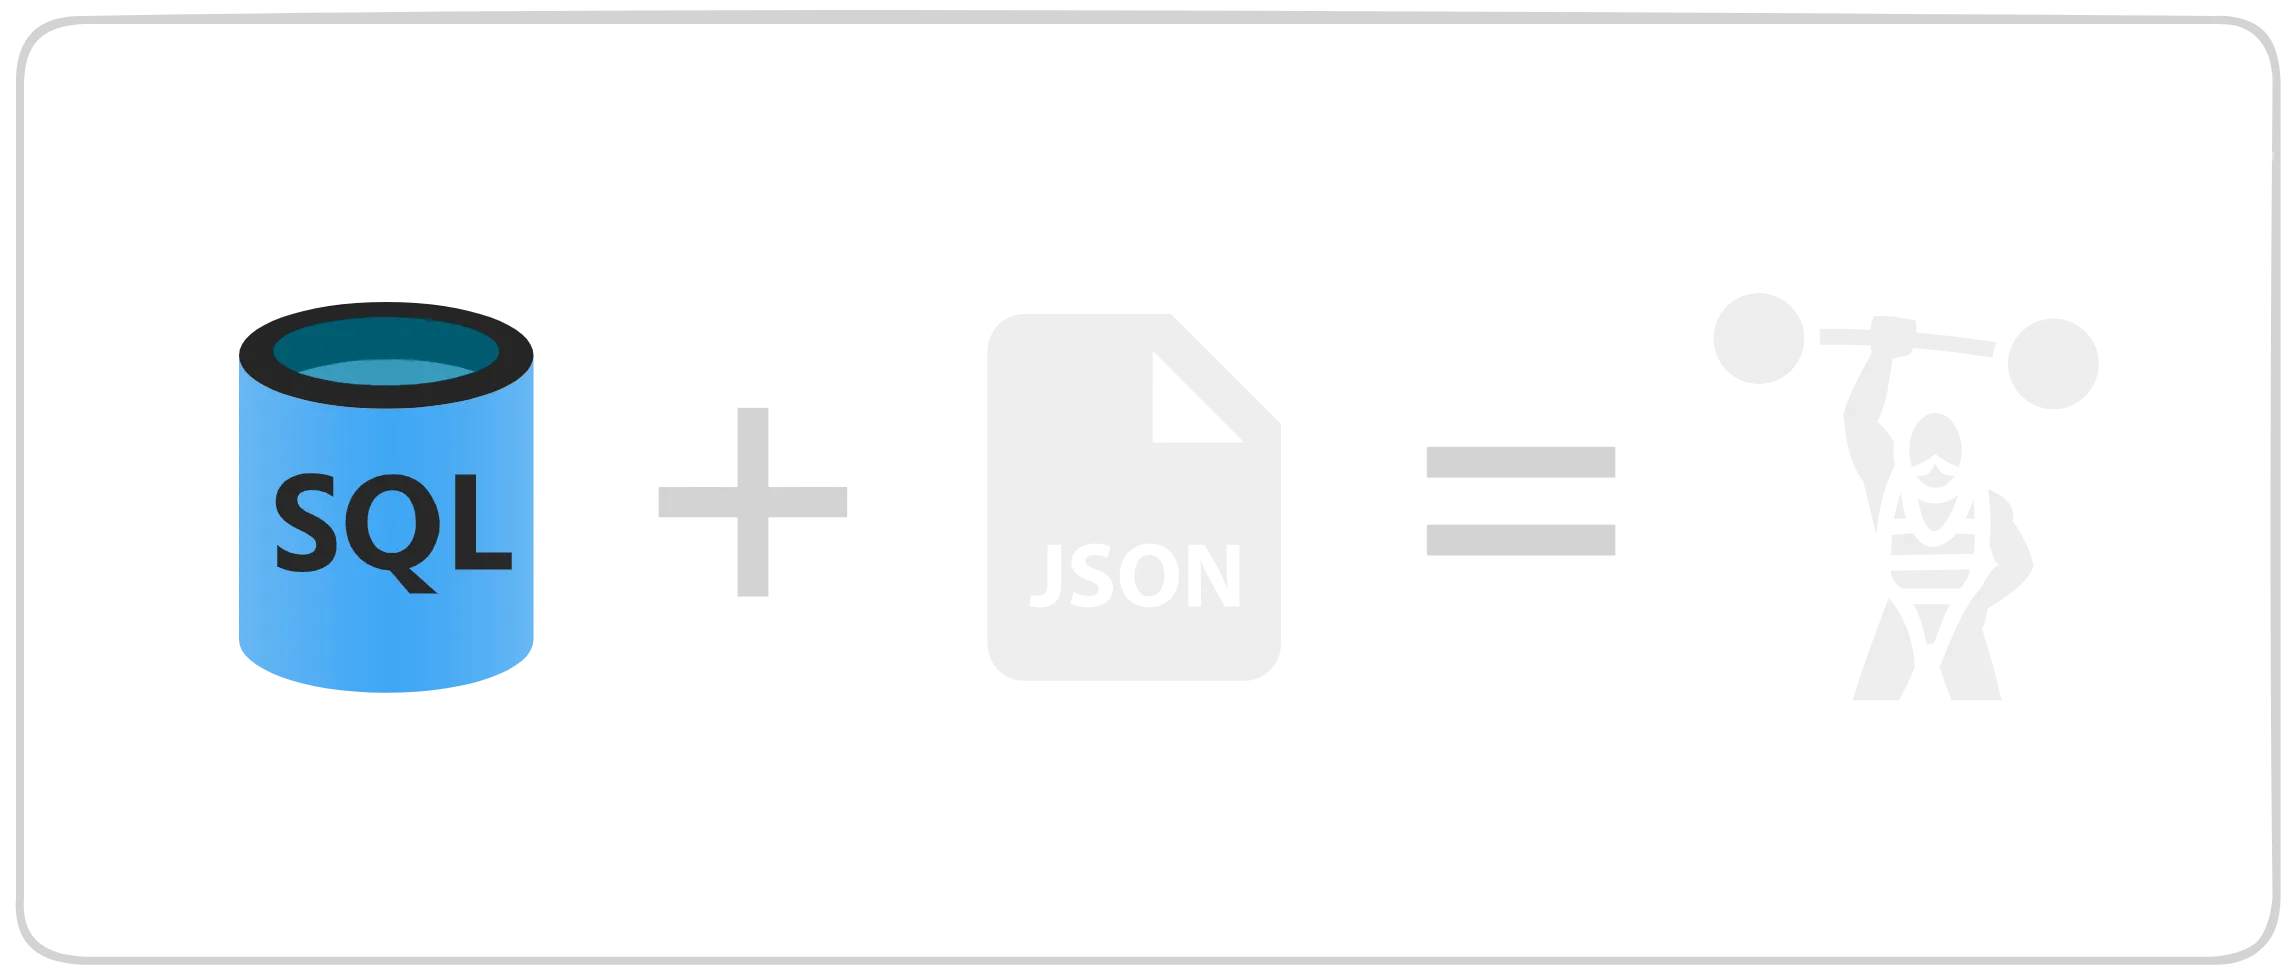 SQL database plus JSON document equals enhanced data processing capability